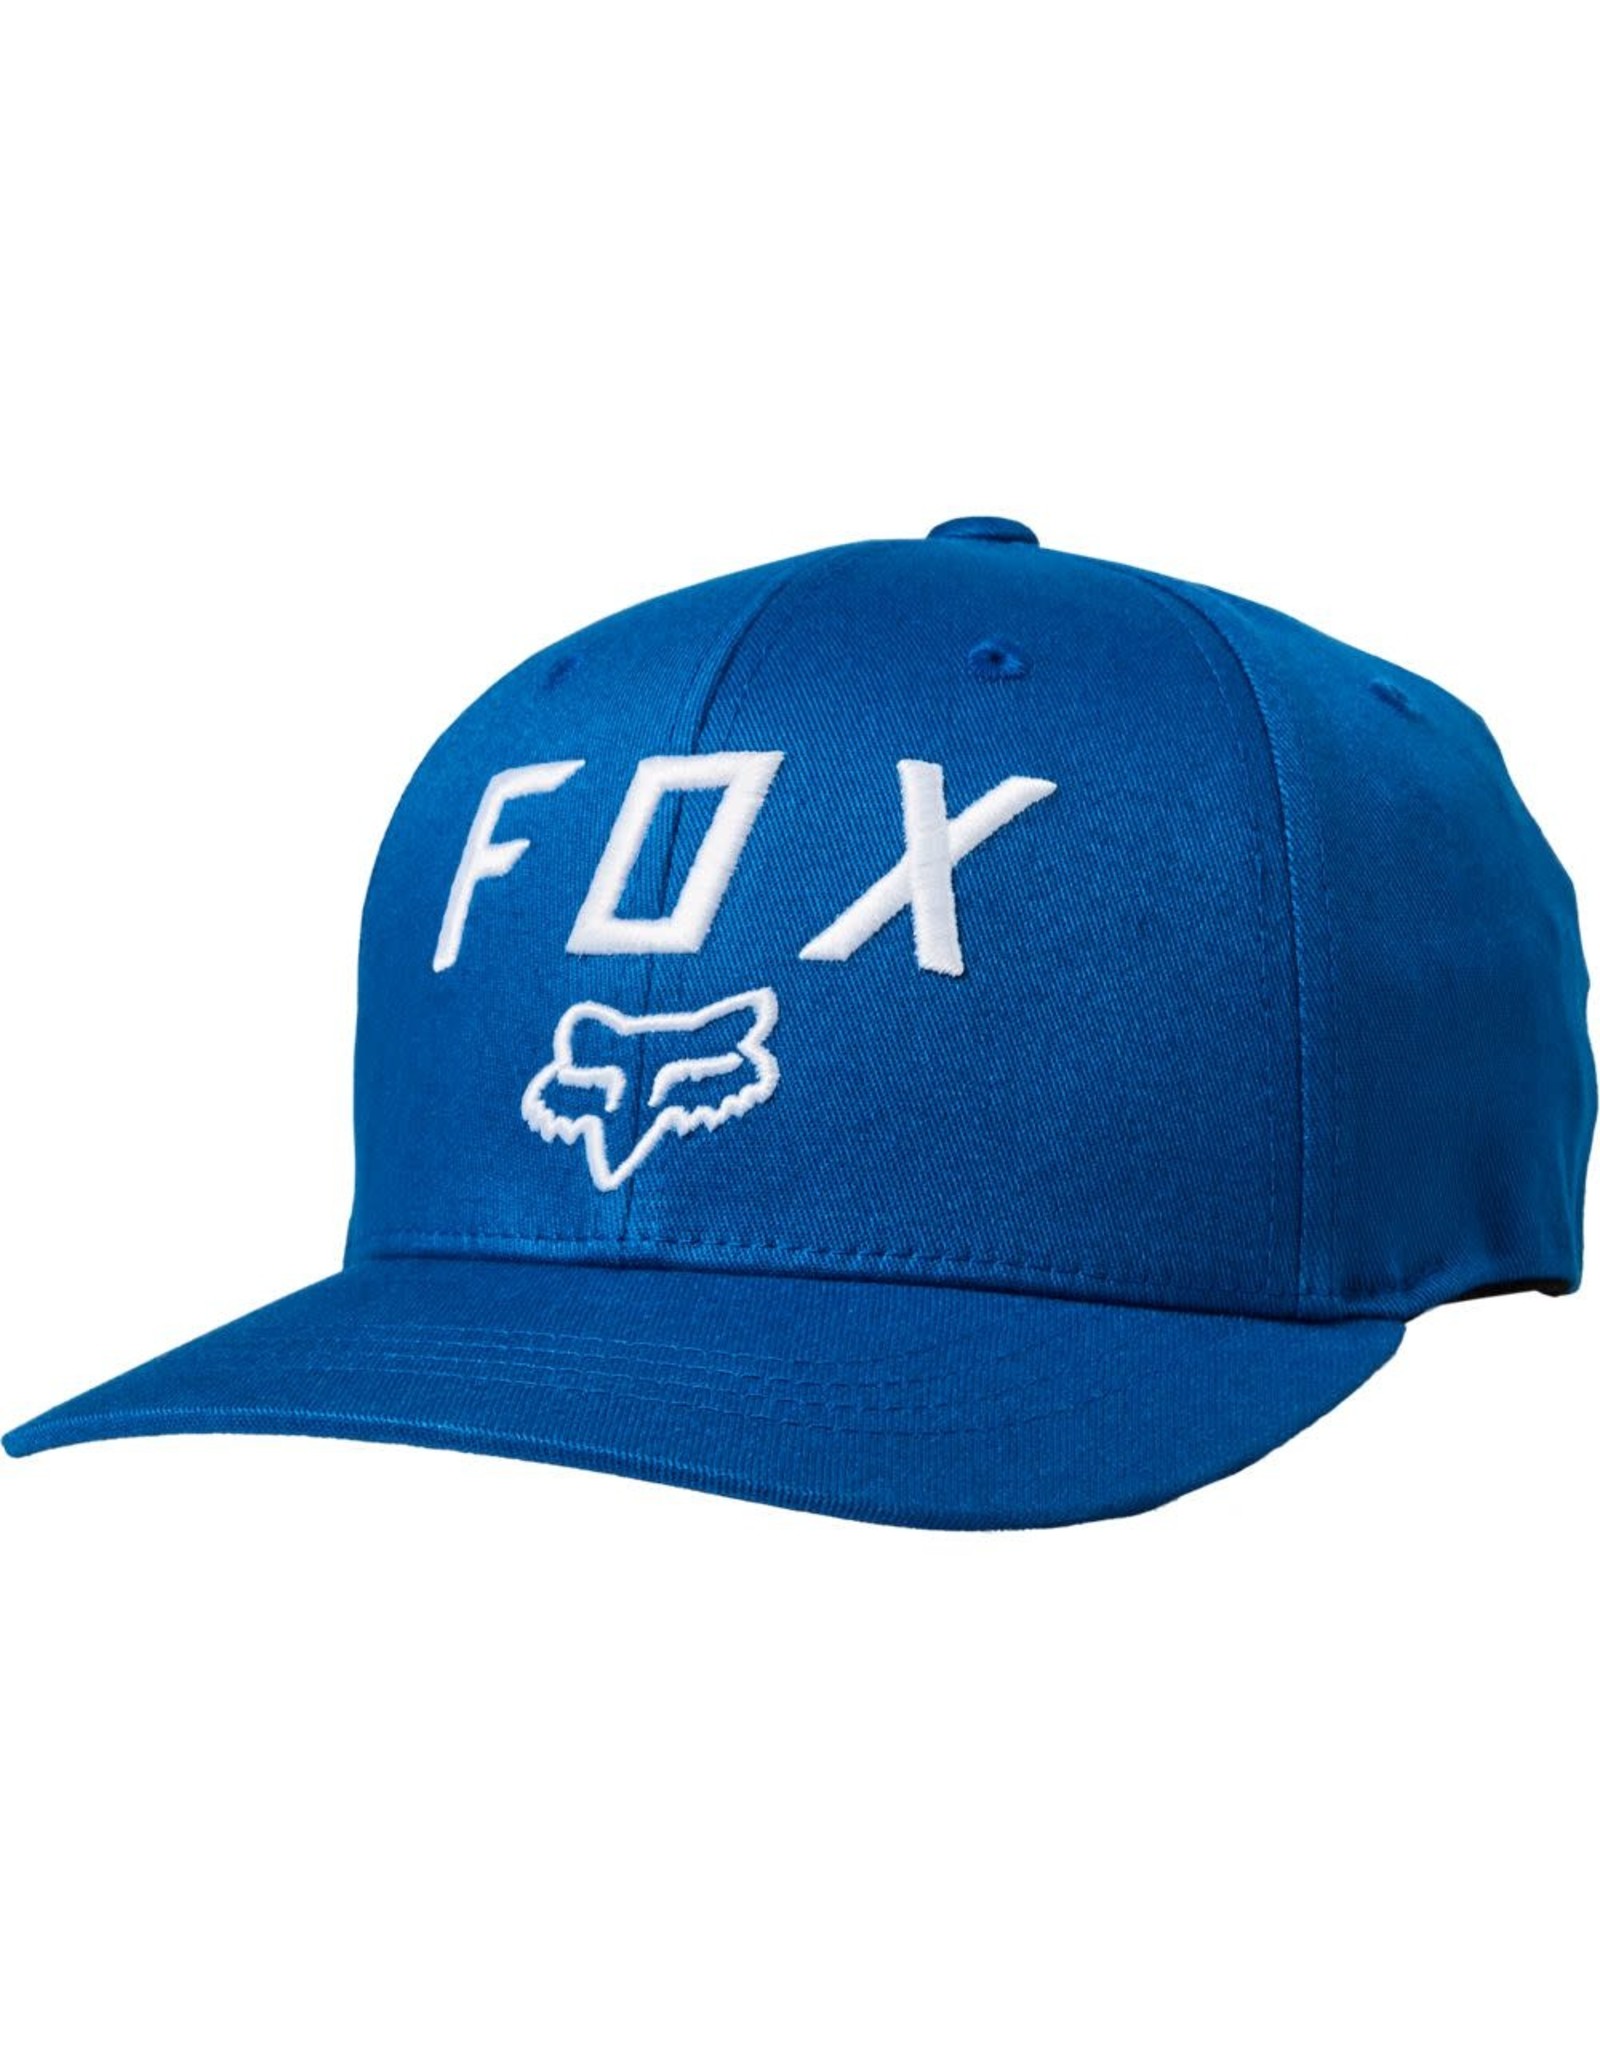 FOX FOX HAT LEGACY MOTH ROYAL BLUE OS SNAPBACK